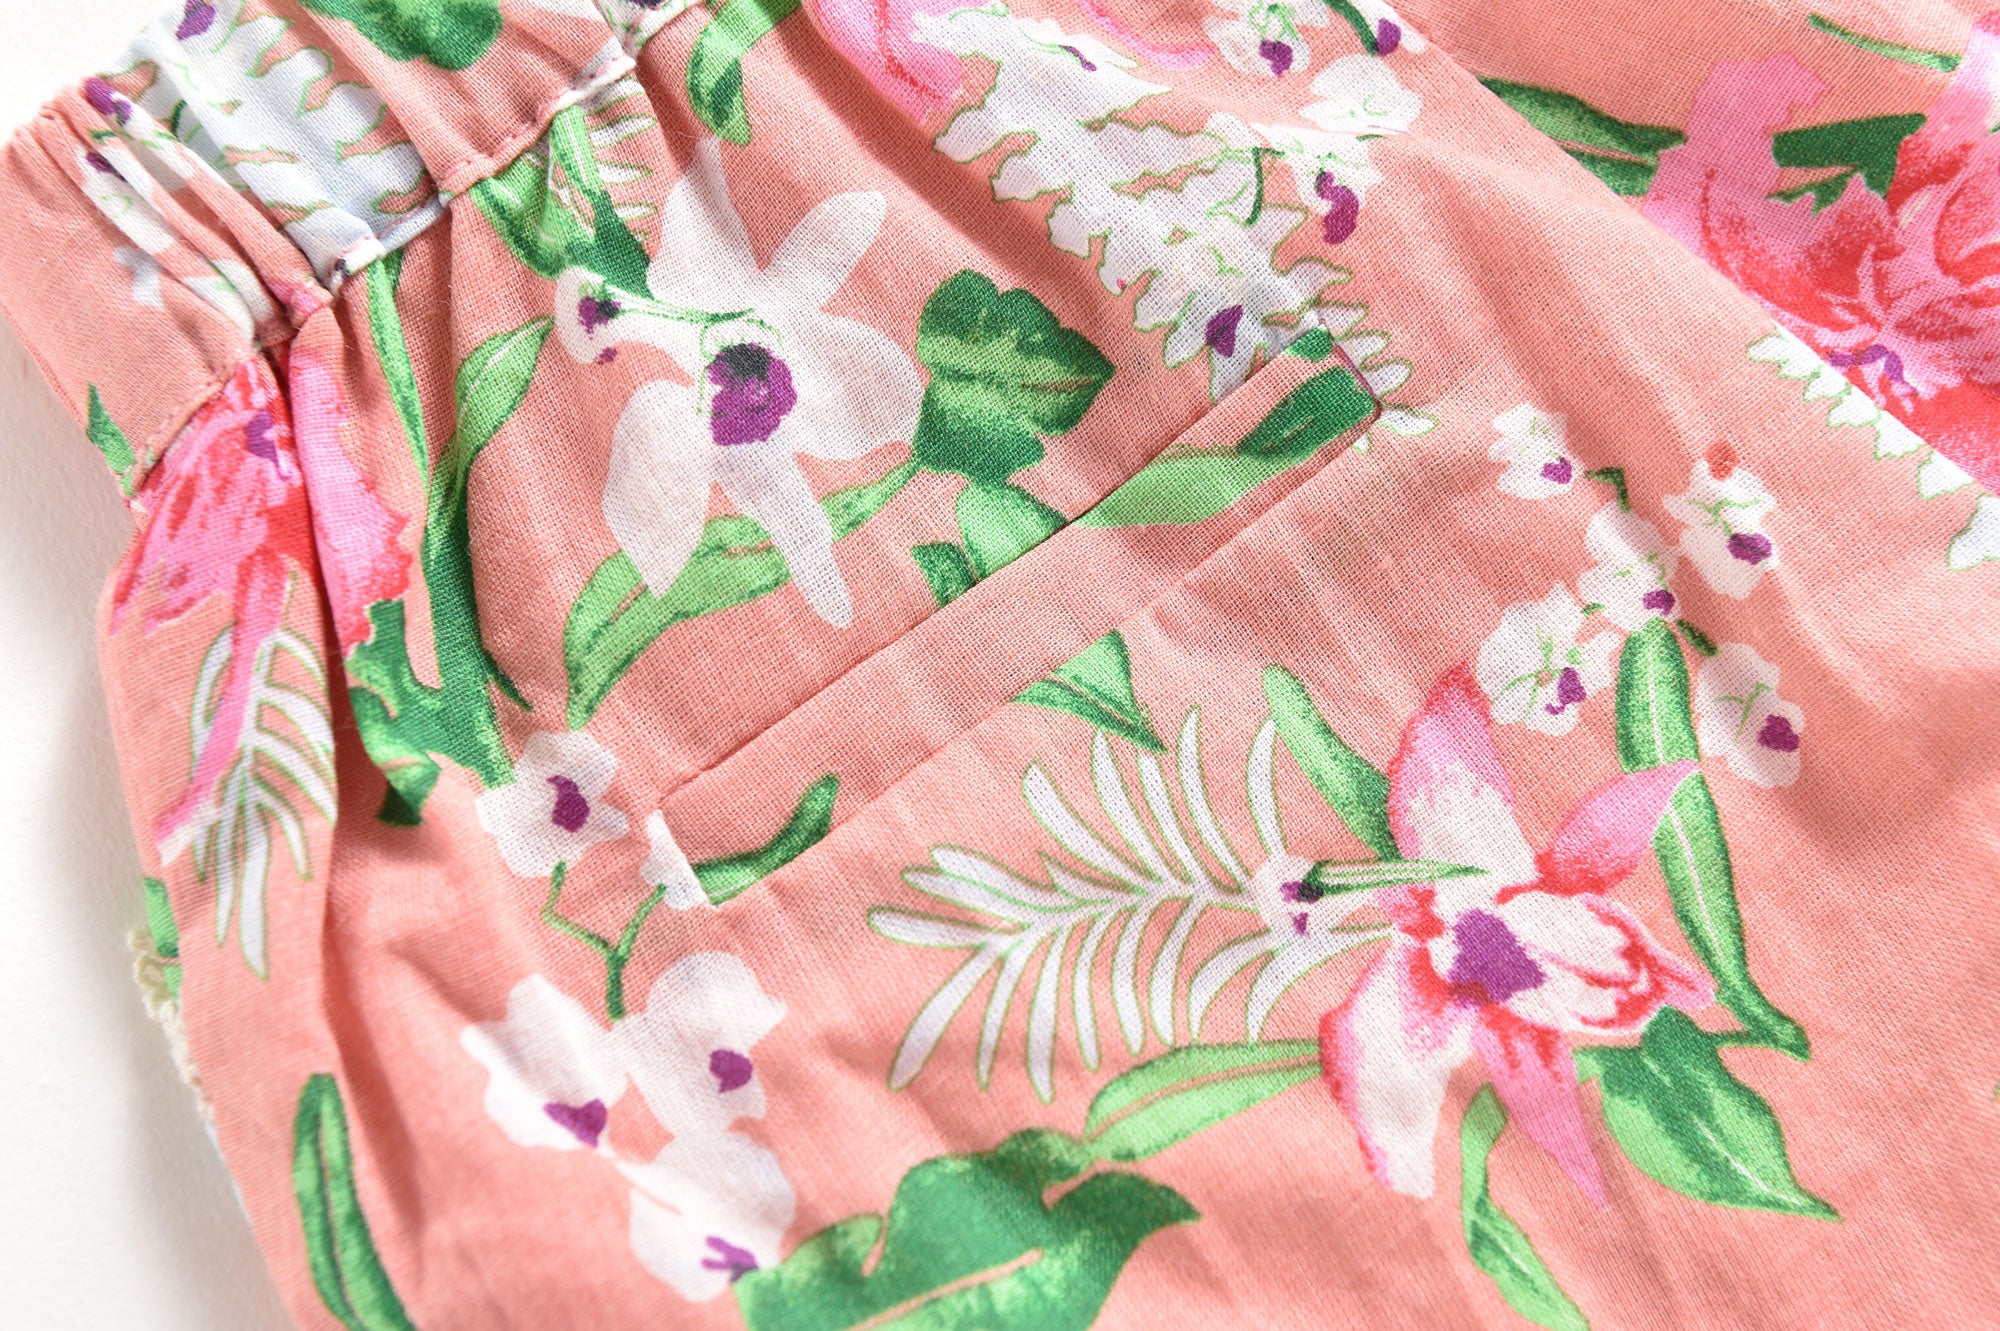 Girls Pink Flowers Cotton Shorts